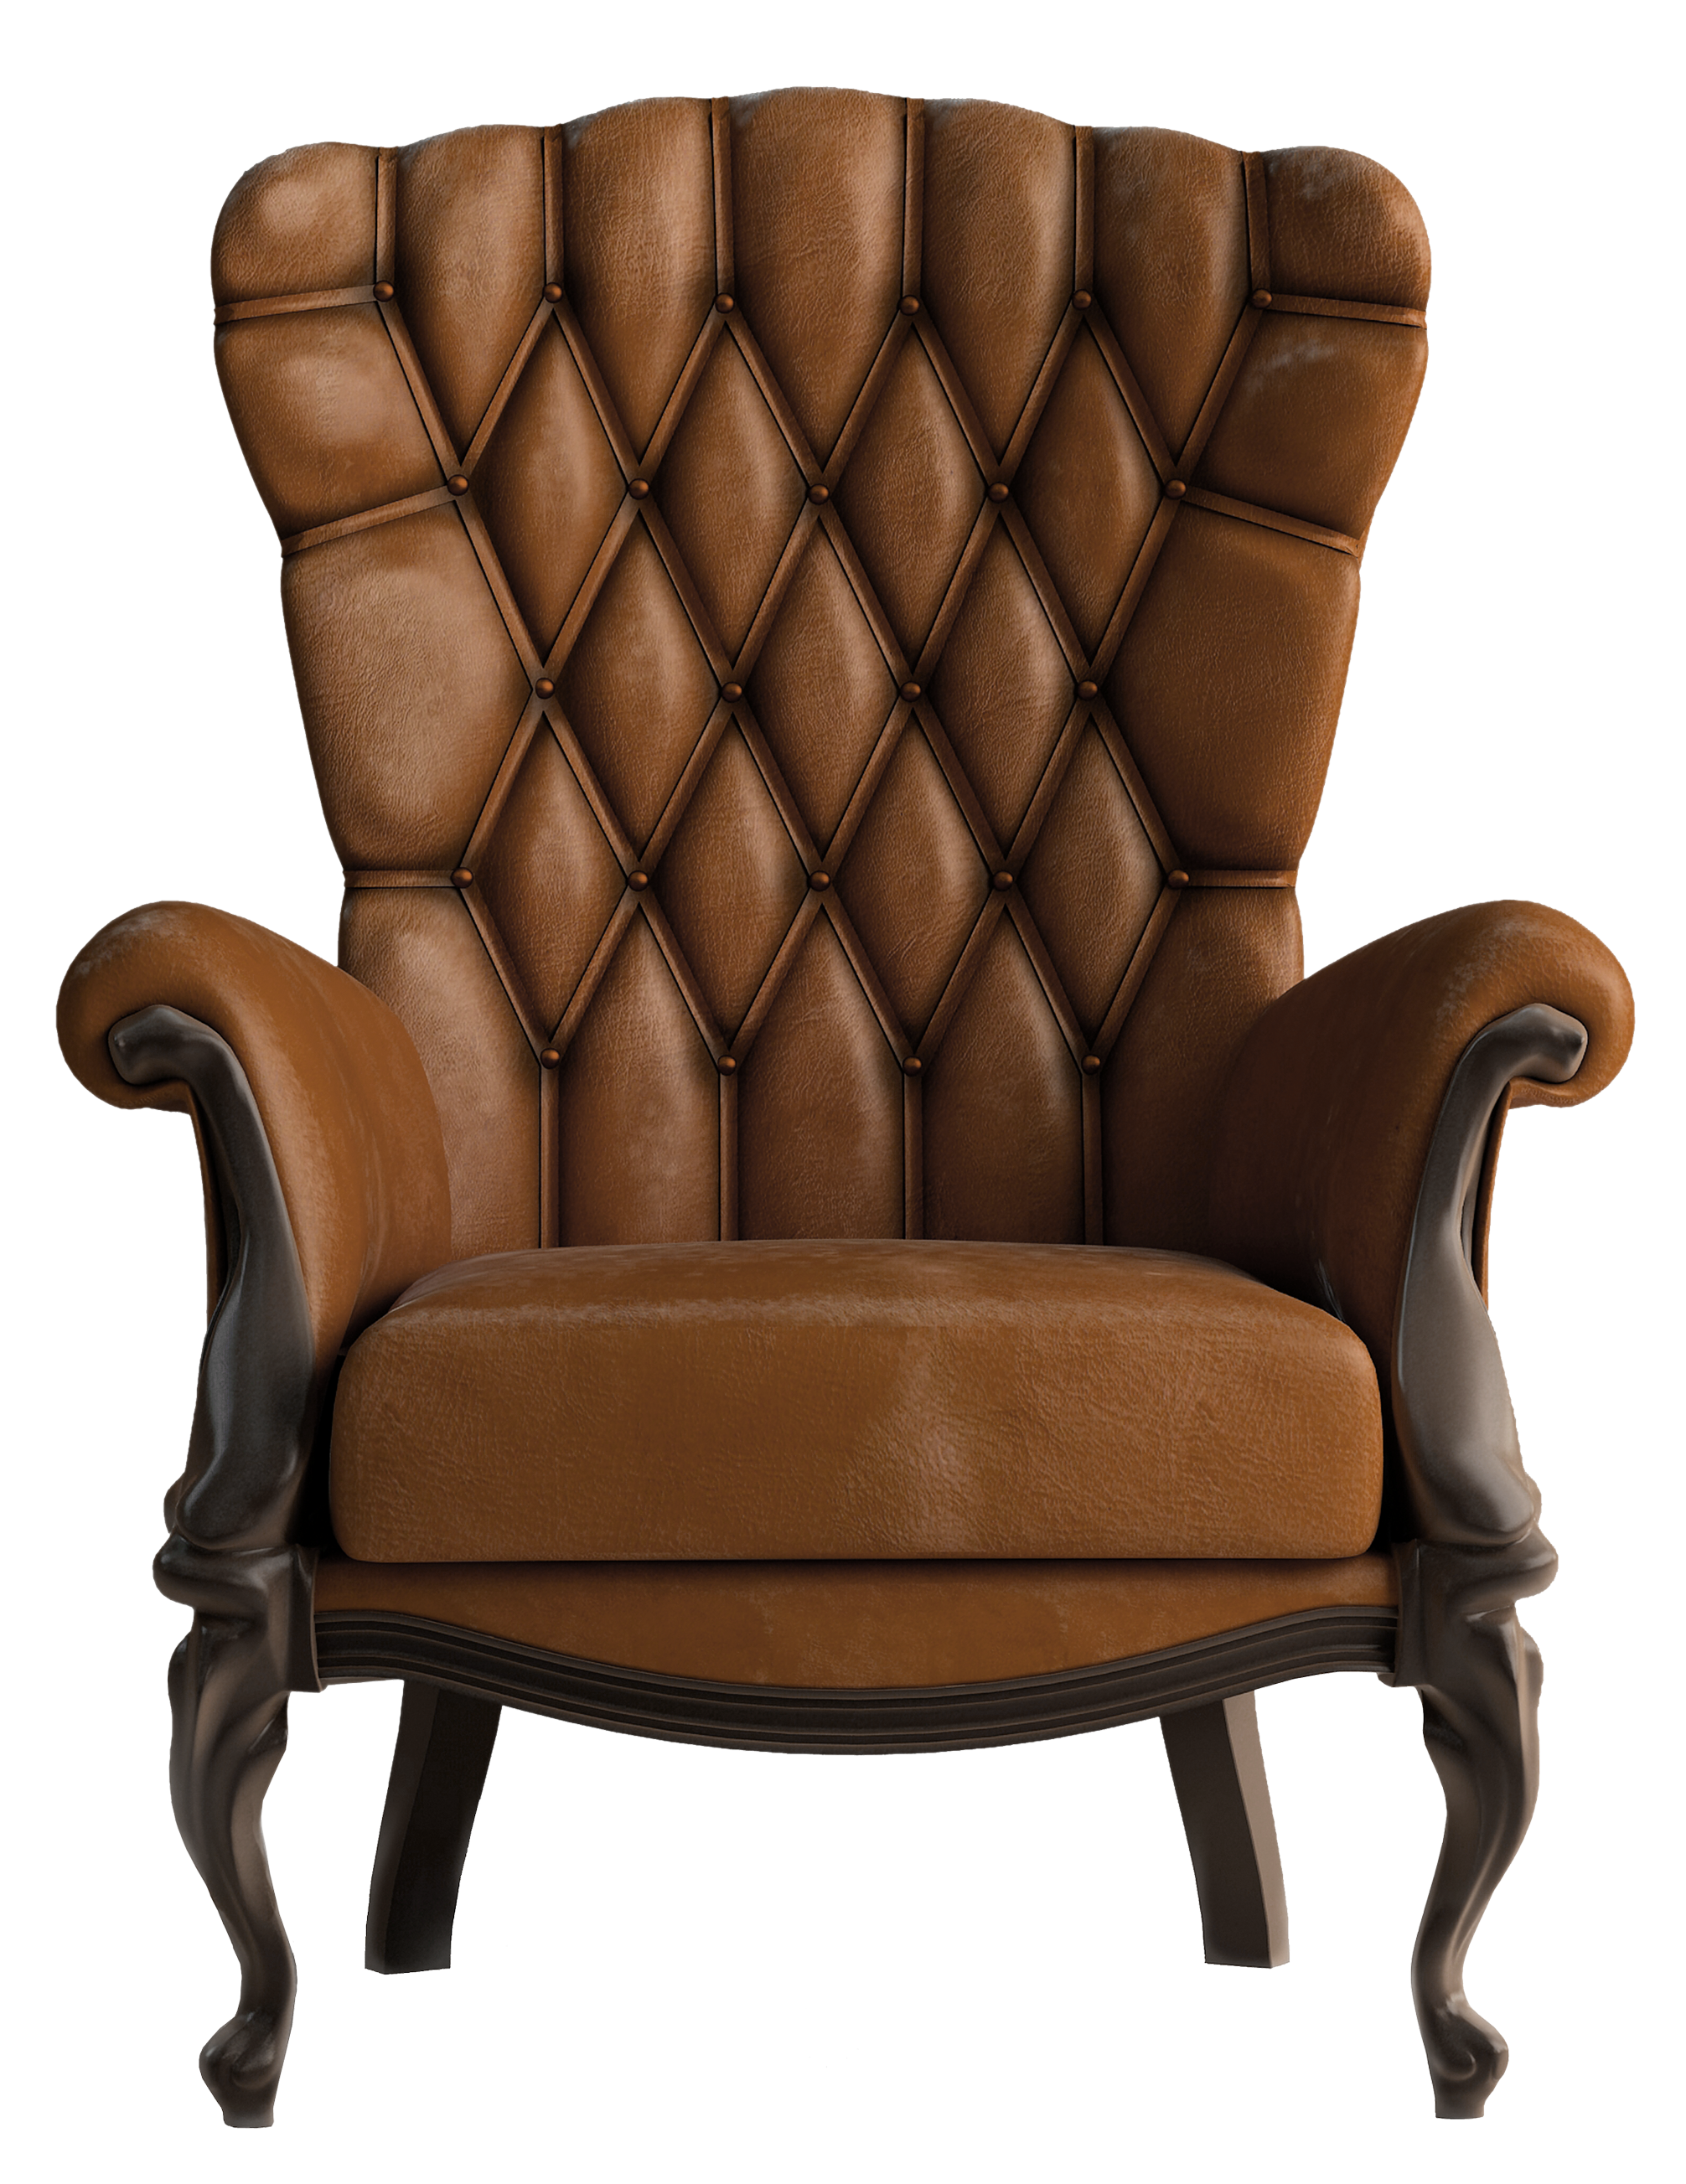 Стул футаж. Кресло Savoy Leather Chair. Кресло Norbert Armchair Brown Vintage. Кресло Vintage Armchair. Кресло кожаное коричневое.